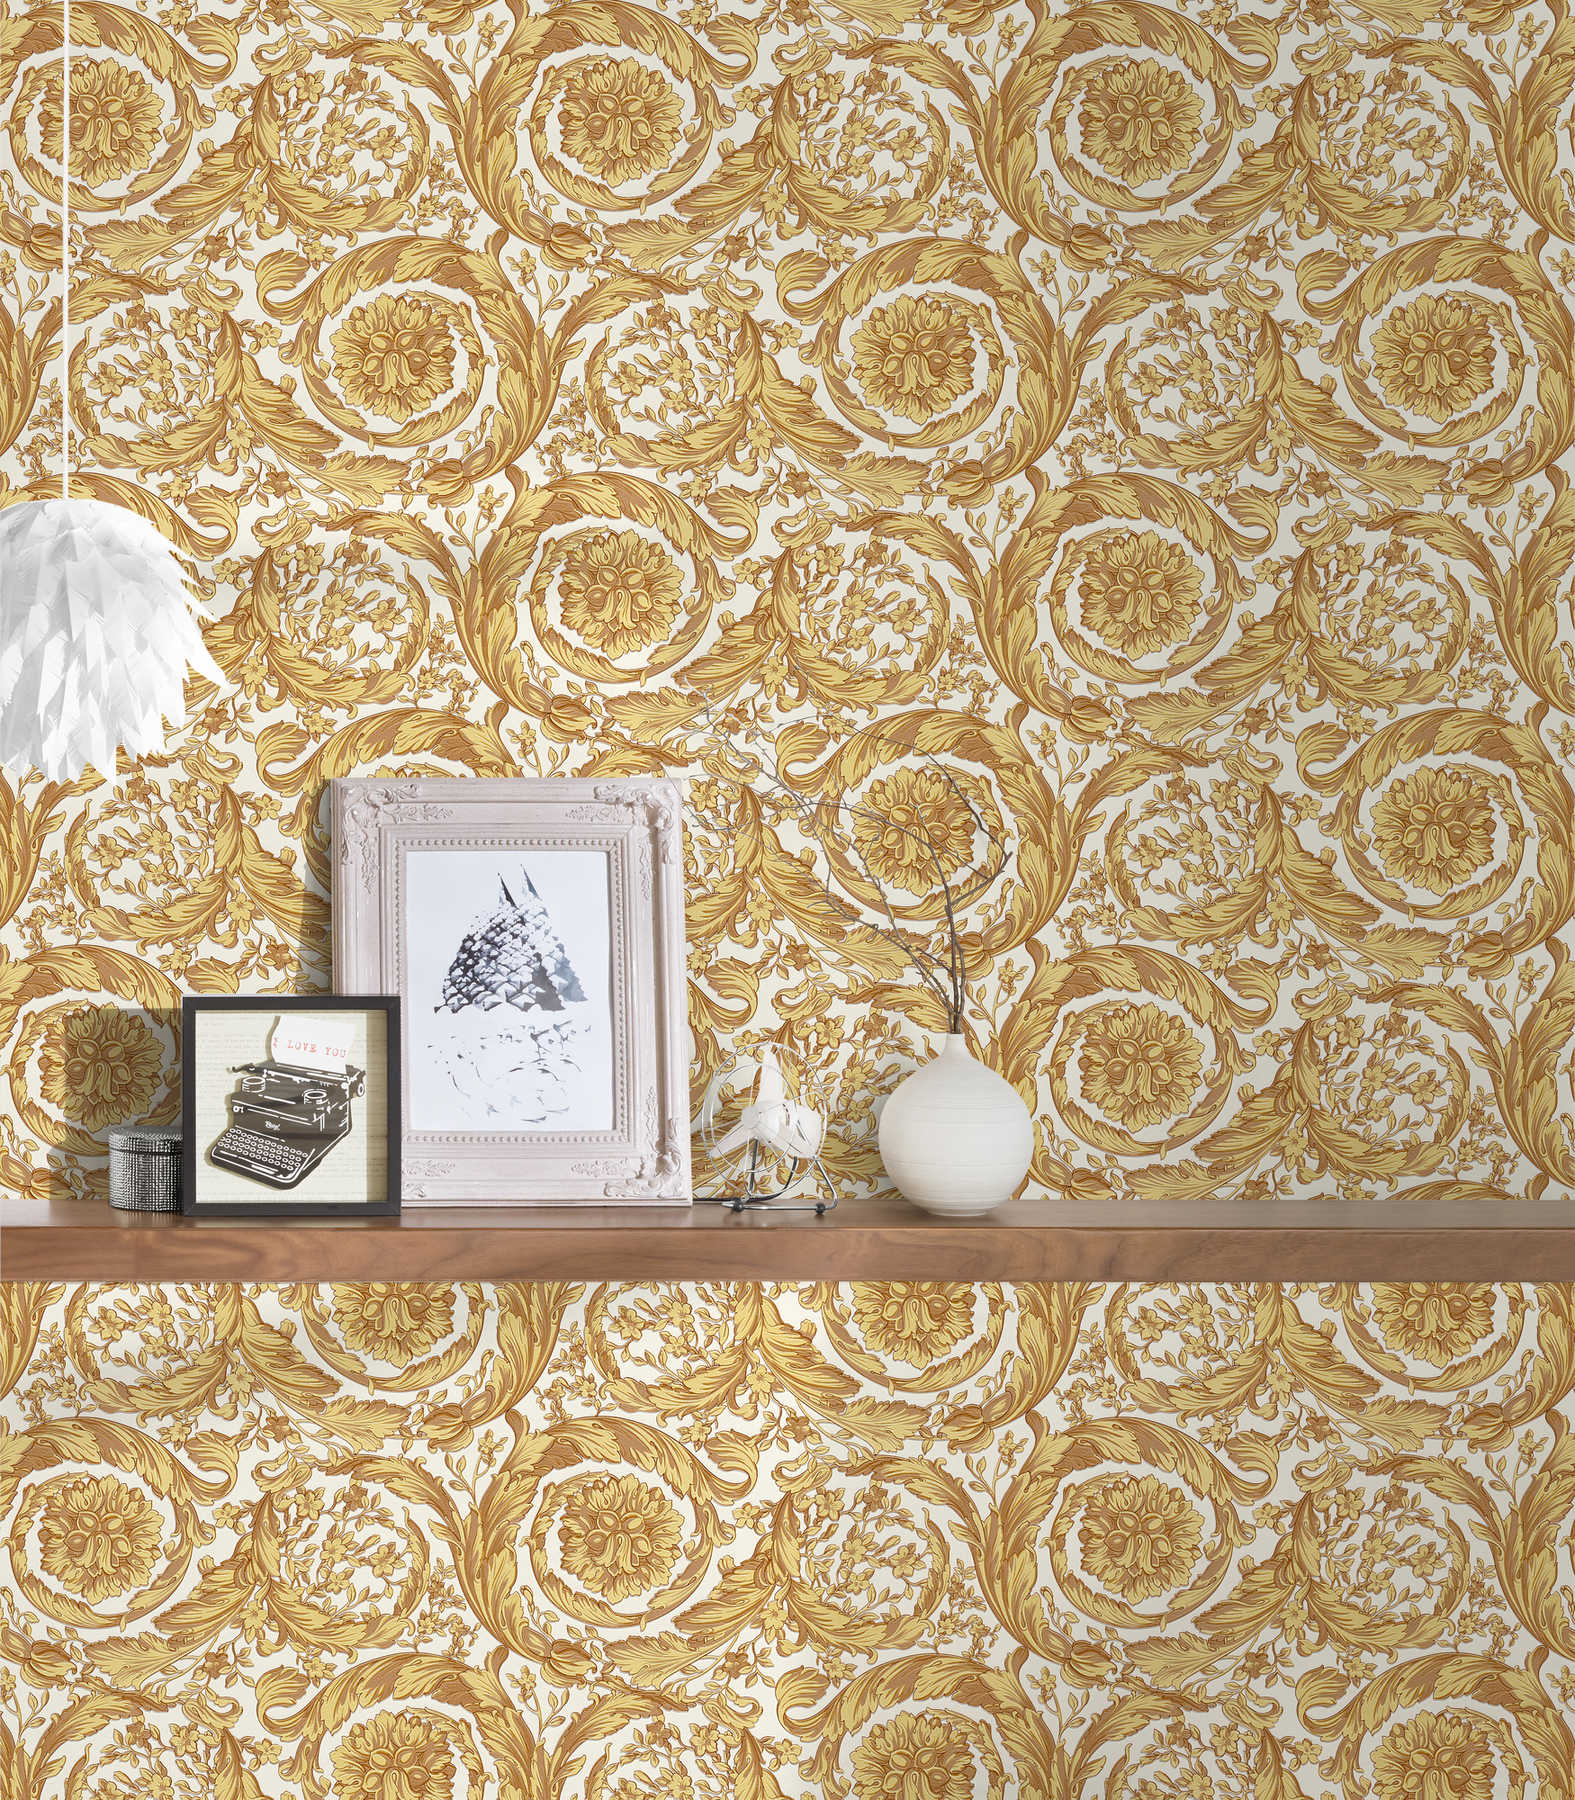             VERSACE Papier peint ornemental motif floral - or, jaune, beige
        